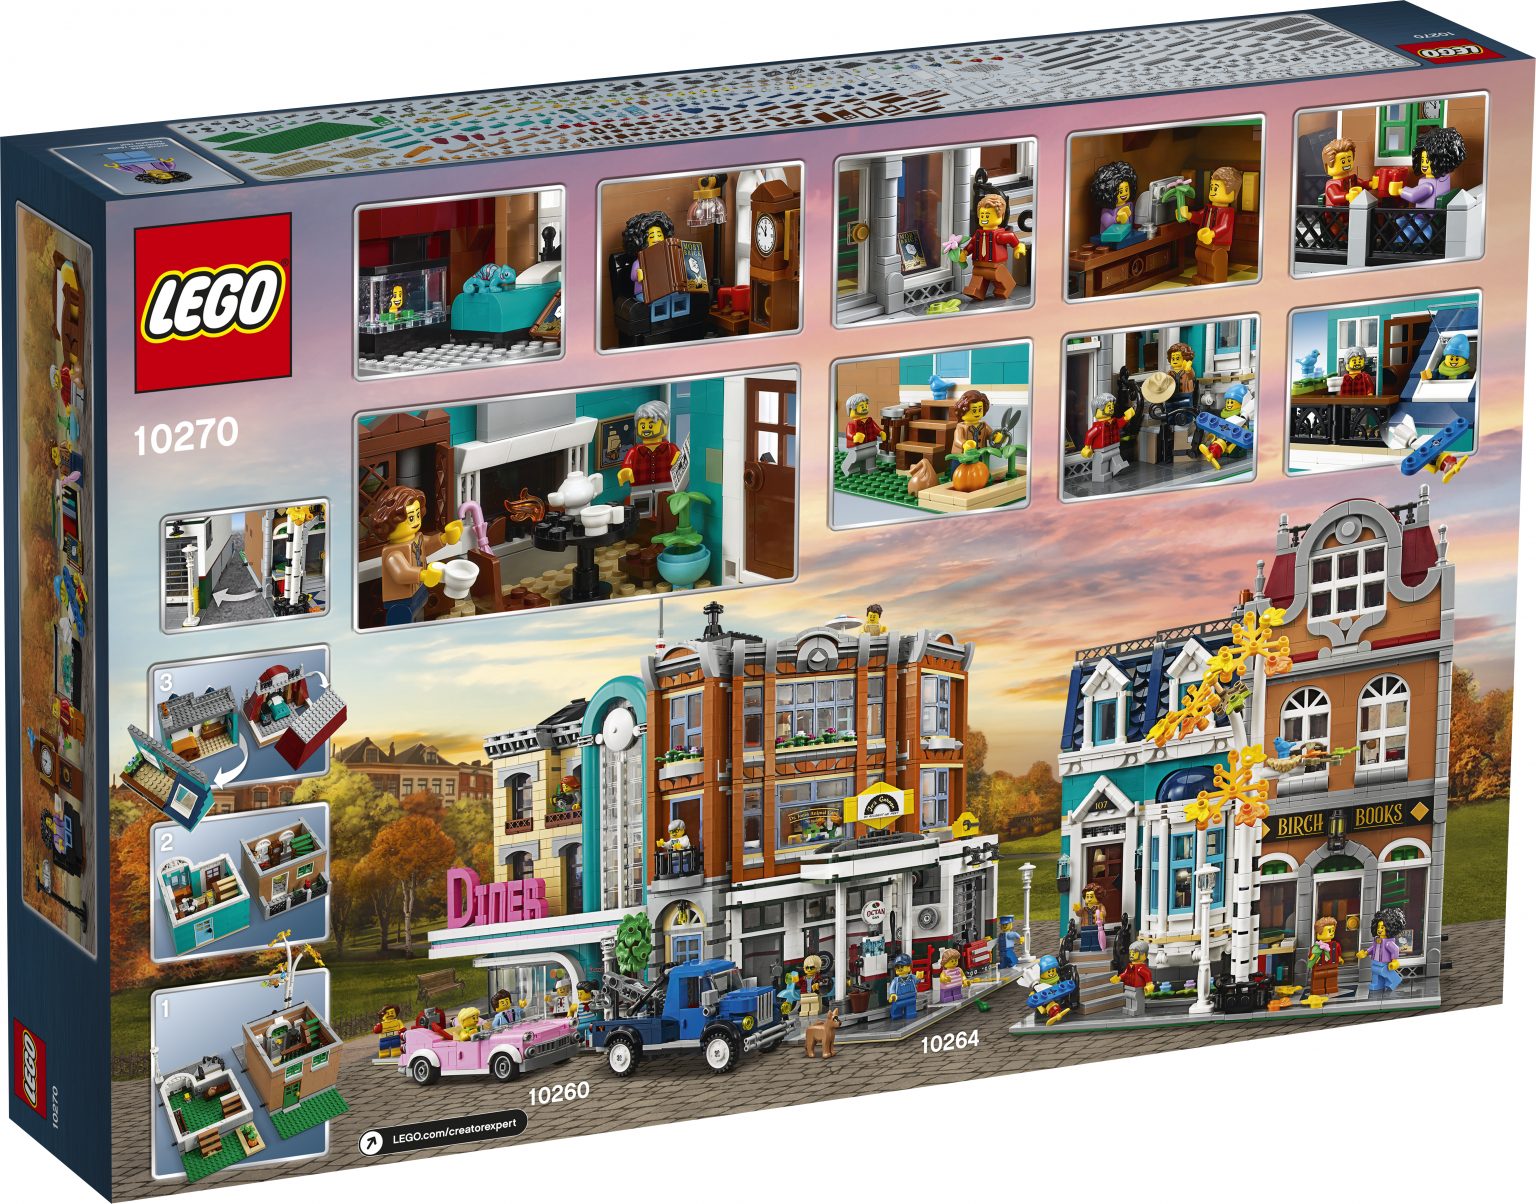 LEGO Creator Expert Bookshop 10270 Modular Building Kit, Big LEGO Set and Collectors Toy for 